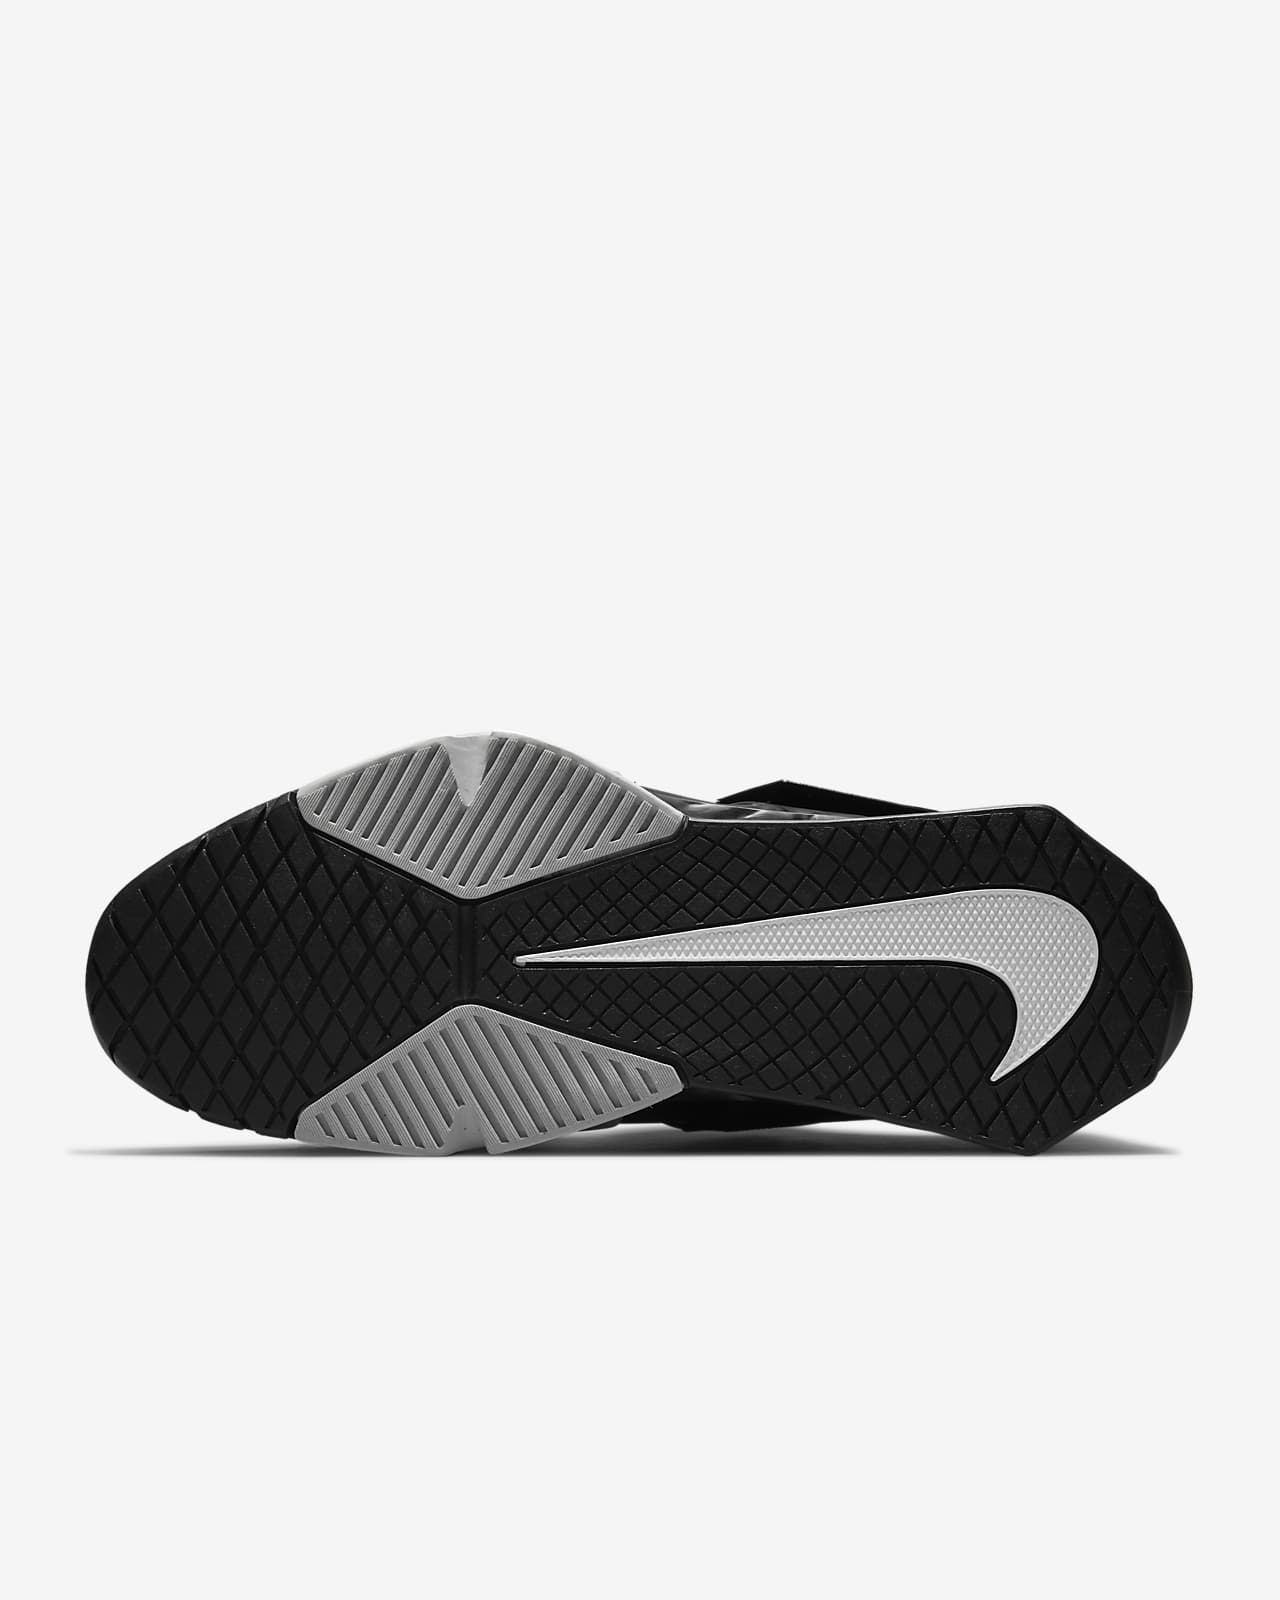 Nike Savaleos Weightlifting Shoe. GB